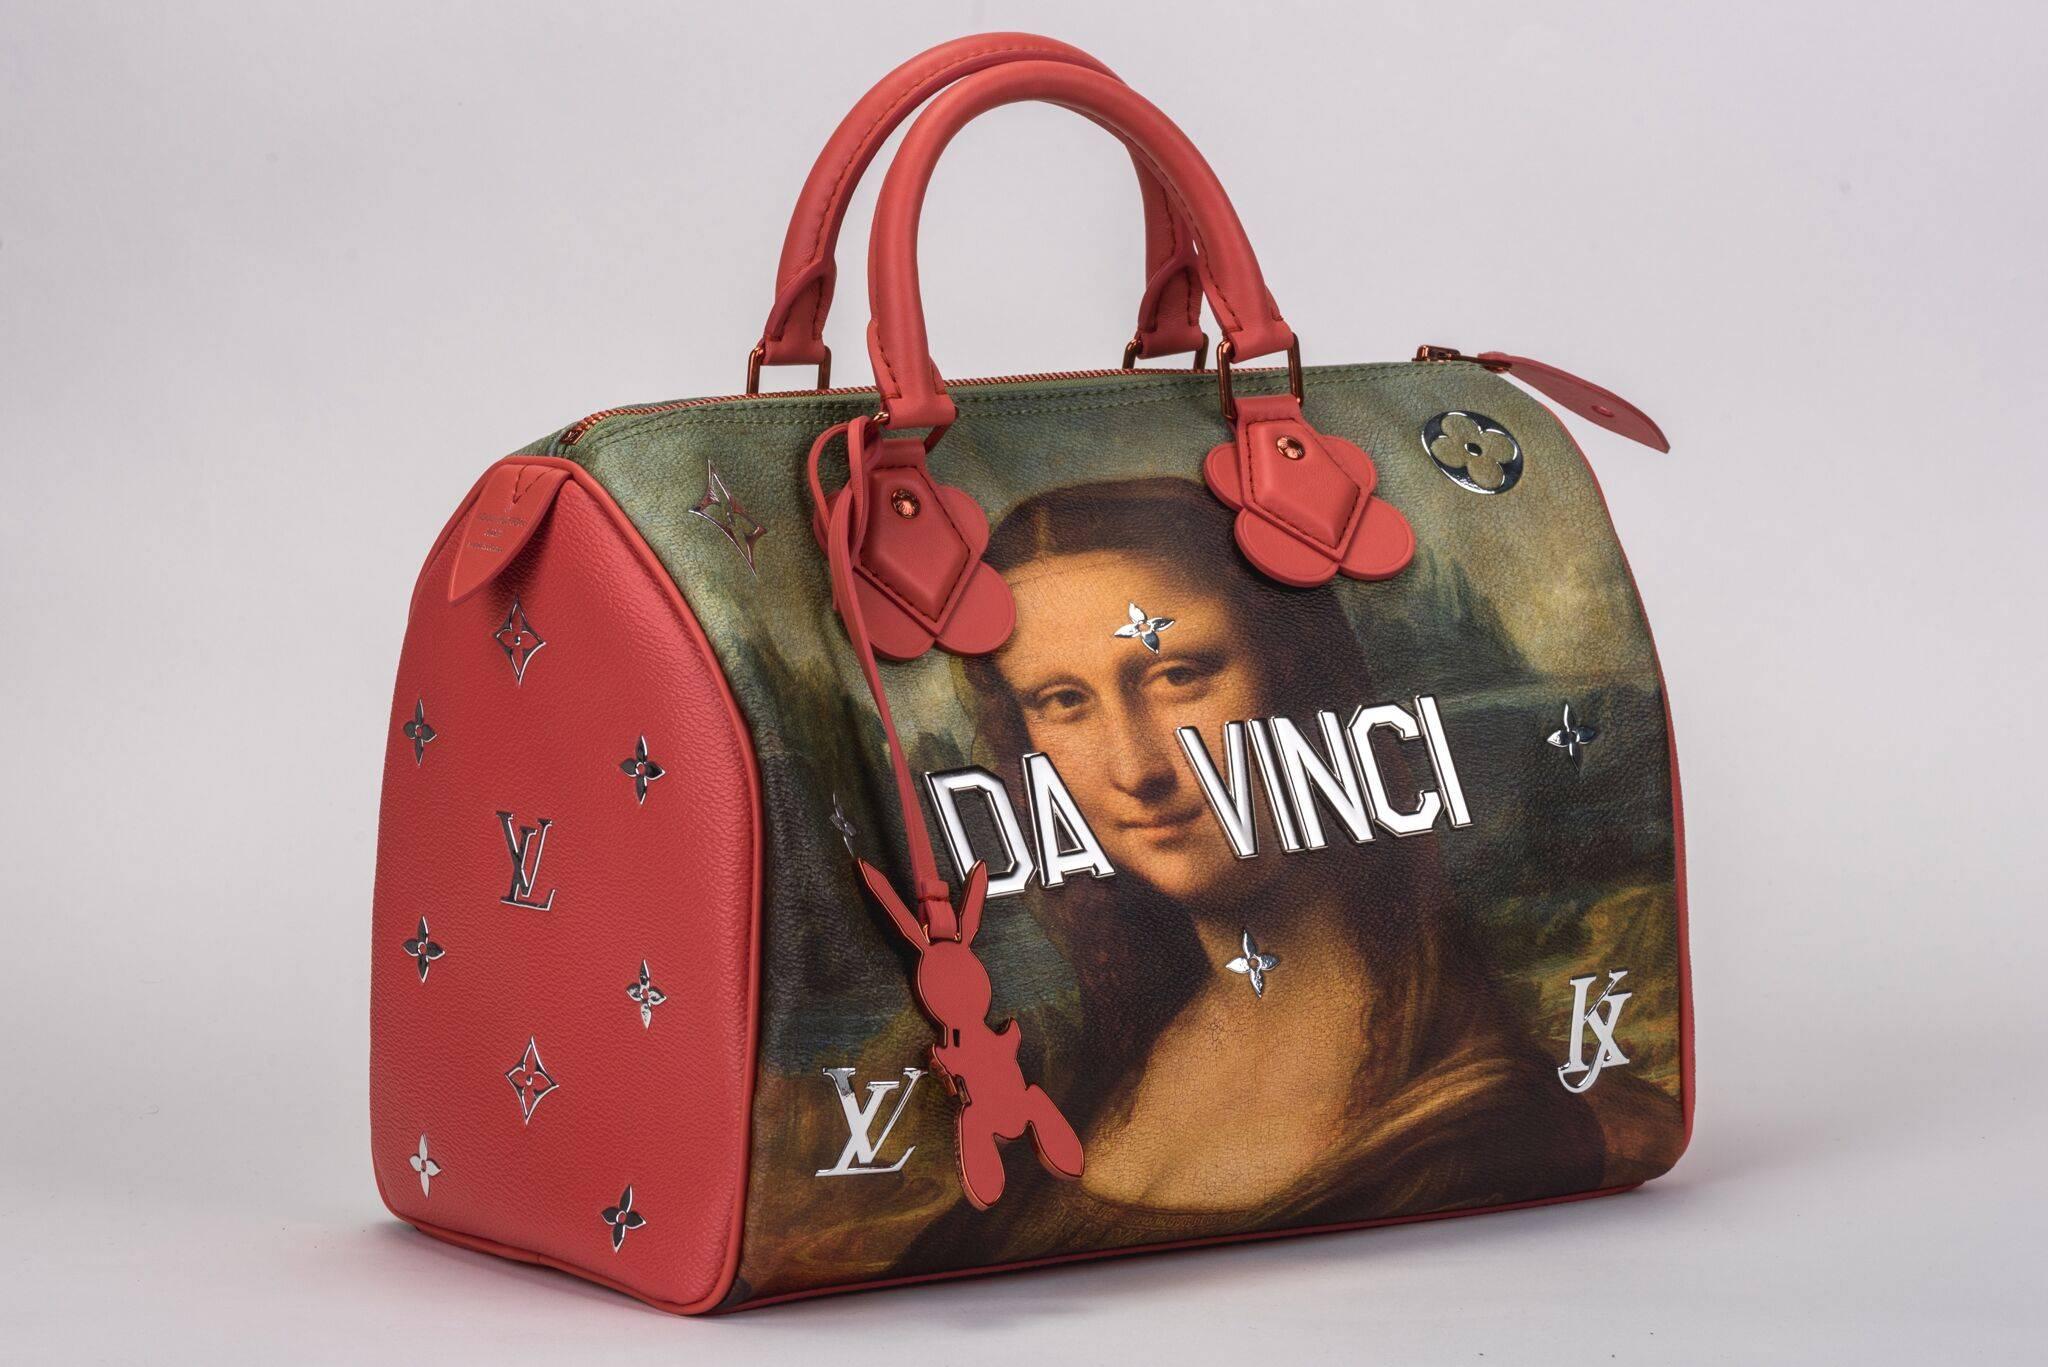 New in Box Vuitton Masters Mona Lisa Jeff Koons Speedy 30 Bag at ...